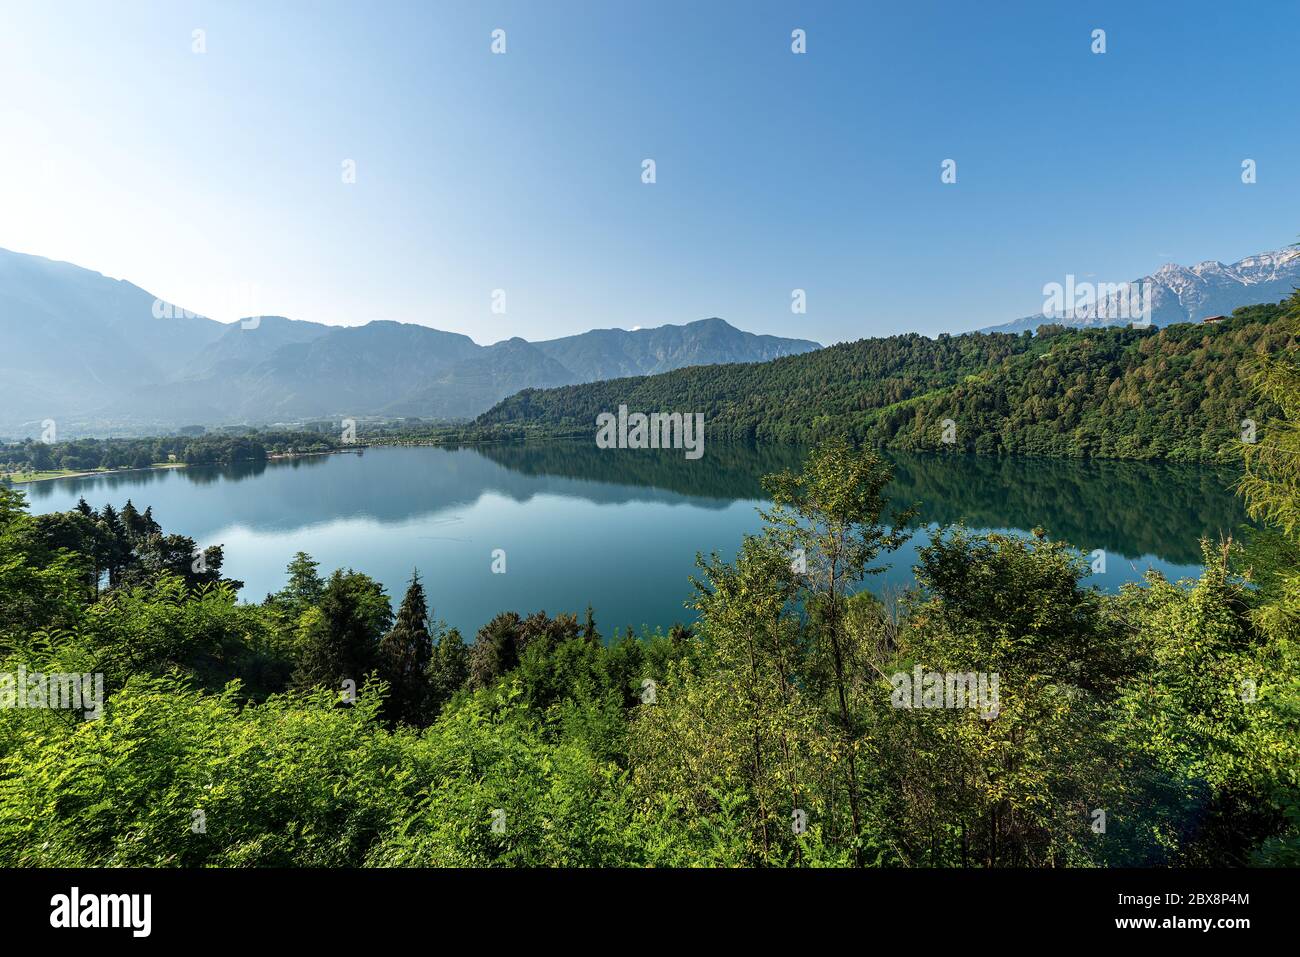 Lago di Levico, small beautiful lake in Italian Alps, Levico Terme town, Valsugana valley, Trento province, Trentino Alto Adige, Italy, Europe Stock Photo